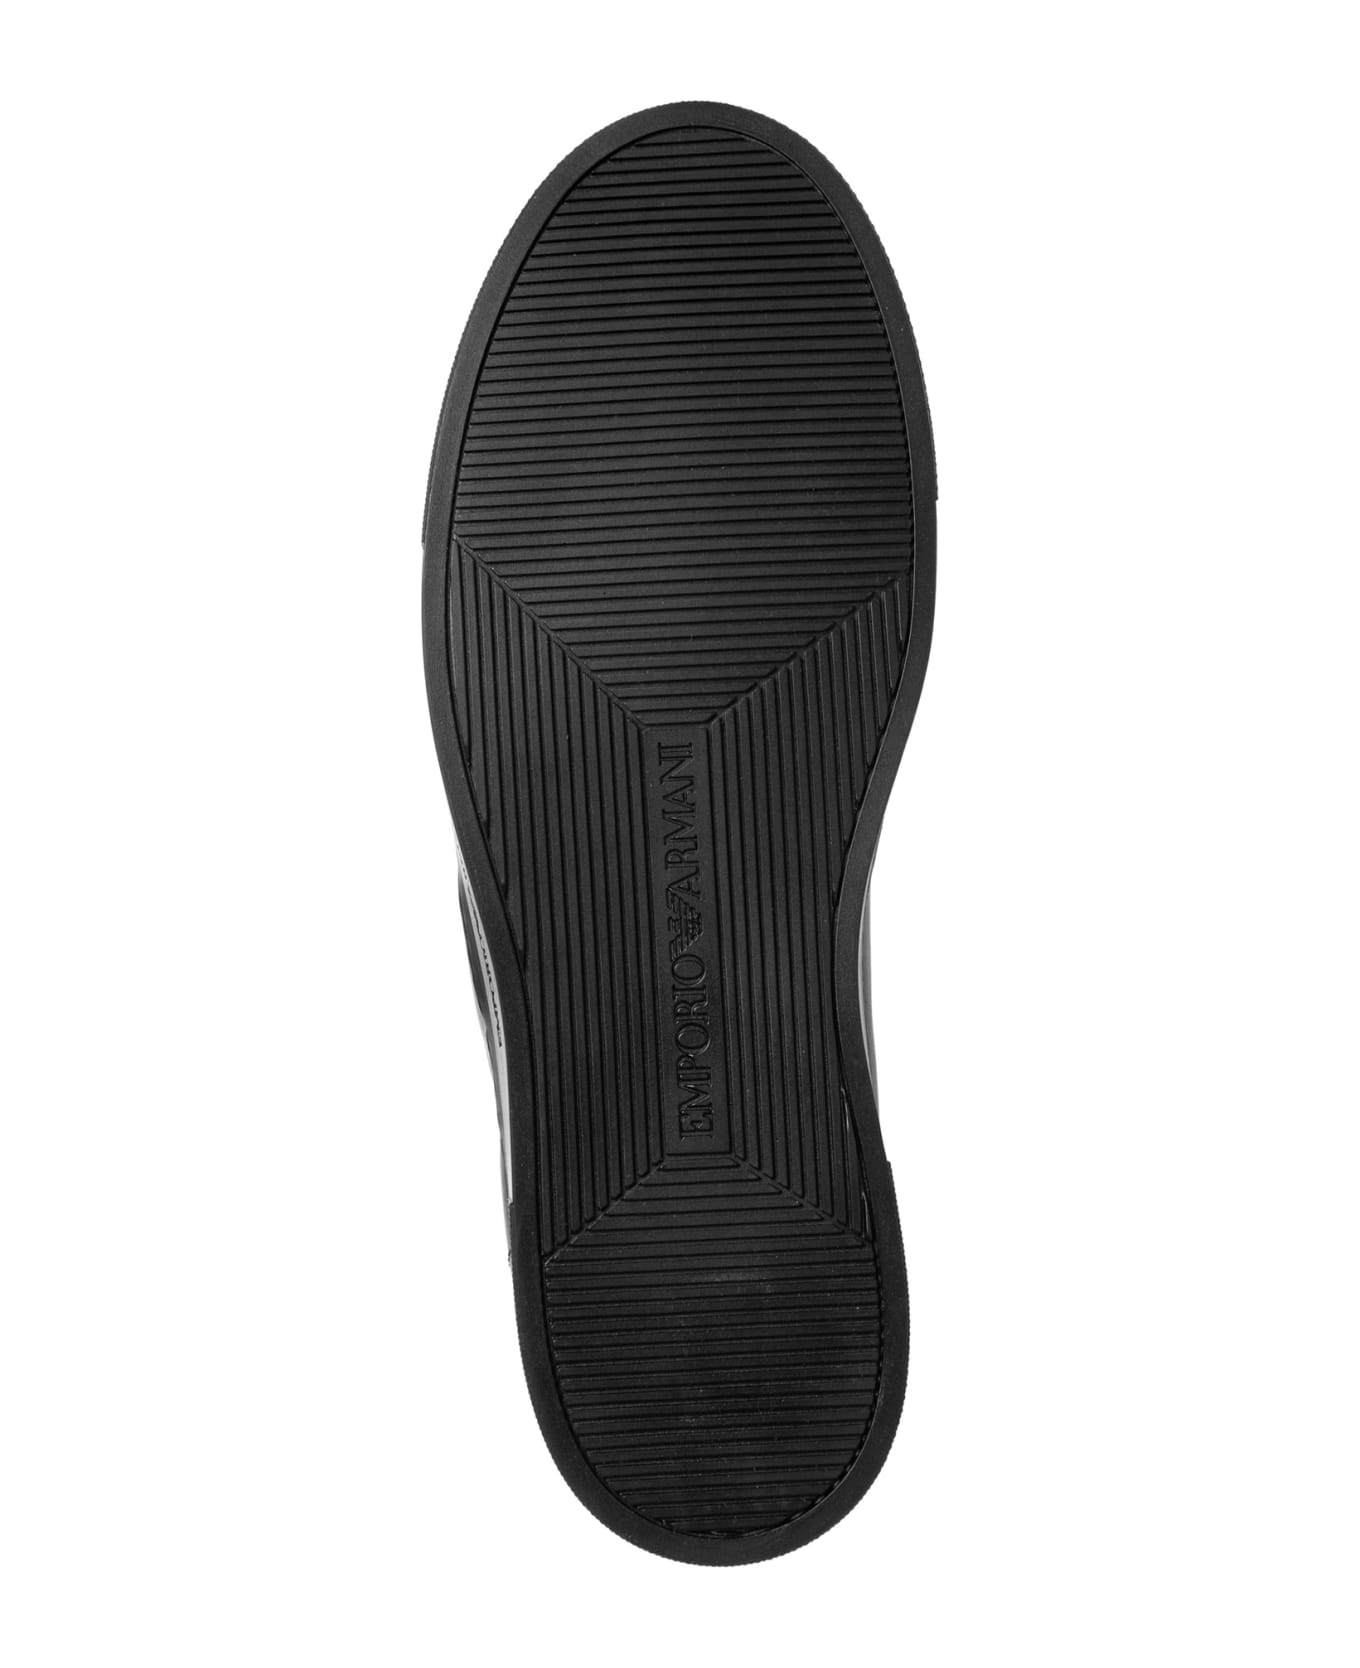 Emporio Armani Leather Sneakers - Black スニーカー